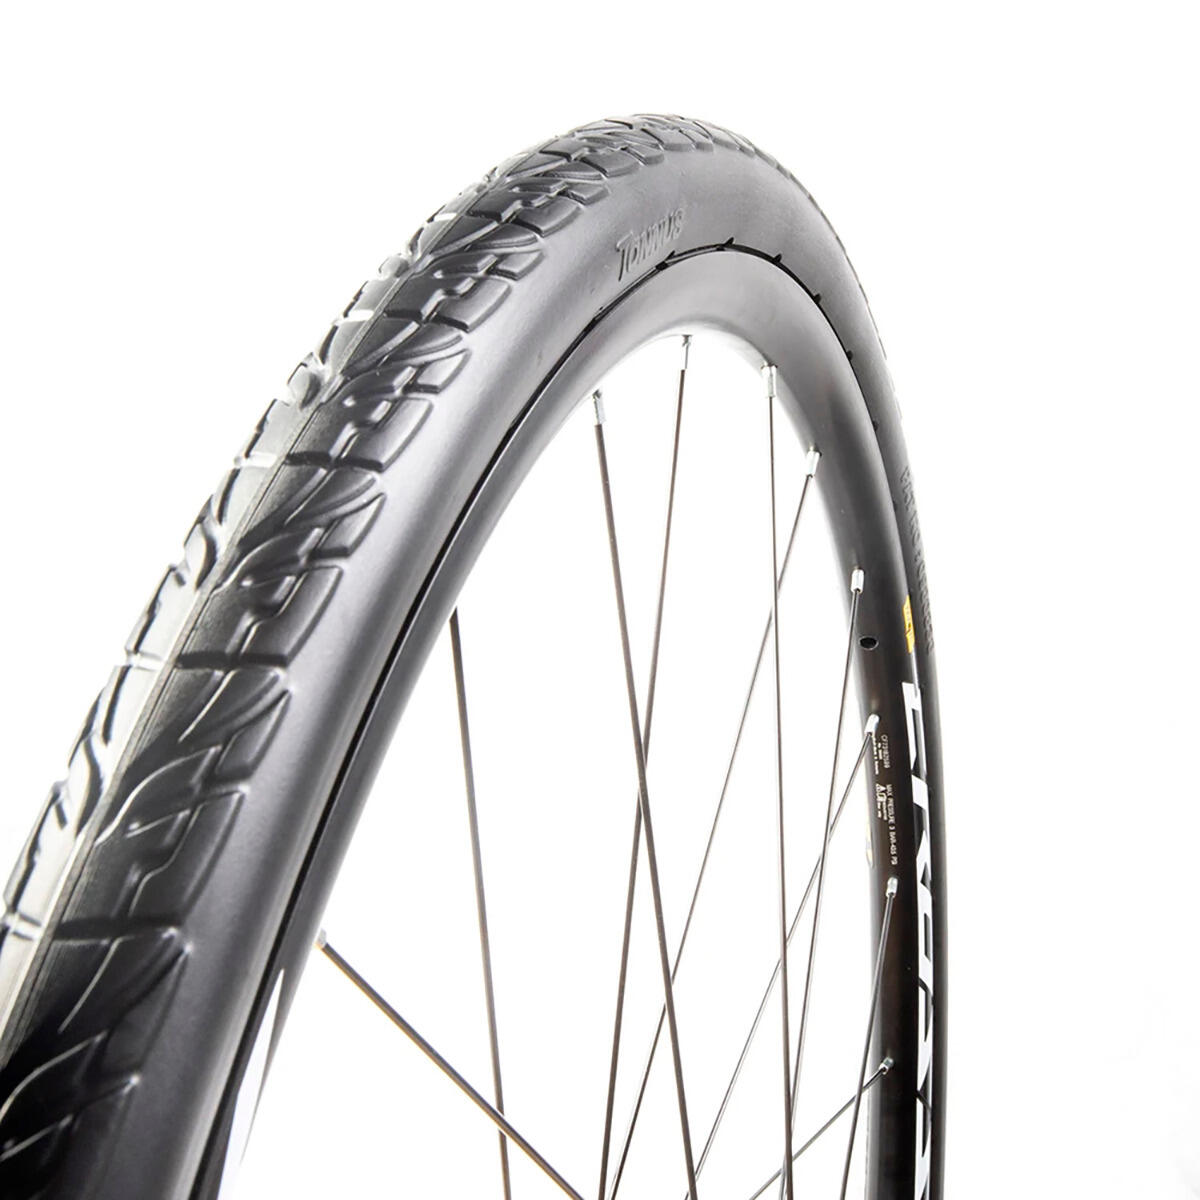 Tannus Aither II Shield City Bike Tyre, Midnight Black - 700c x 40 1/5